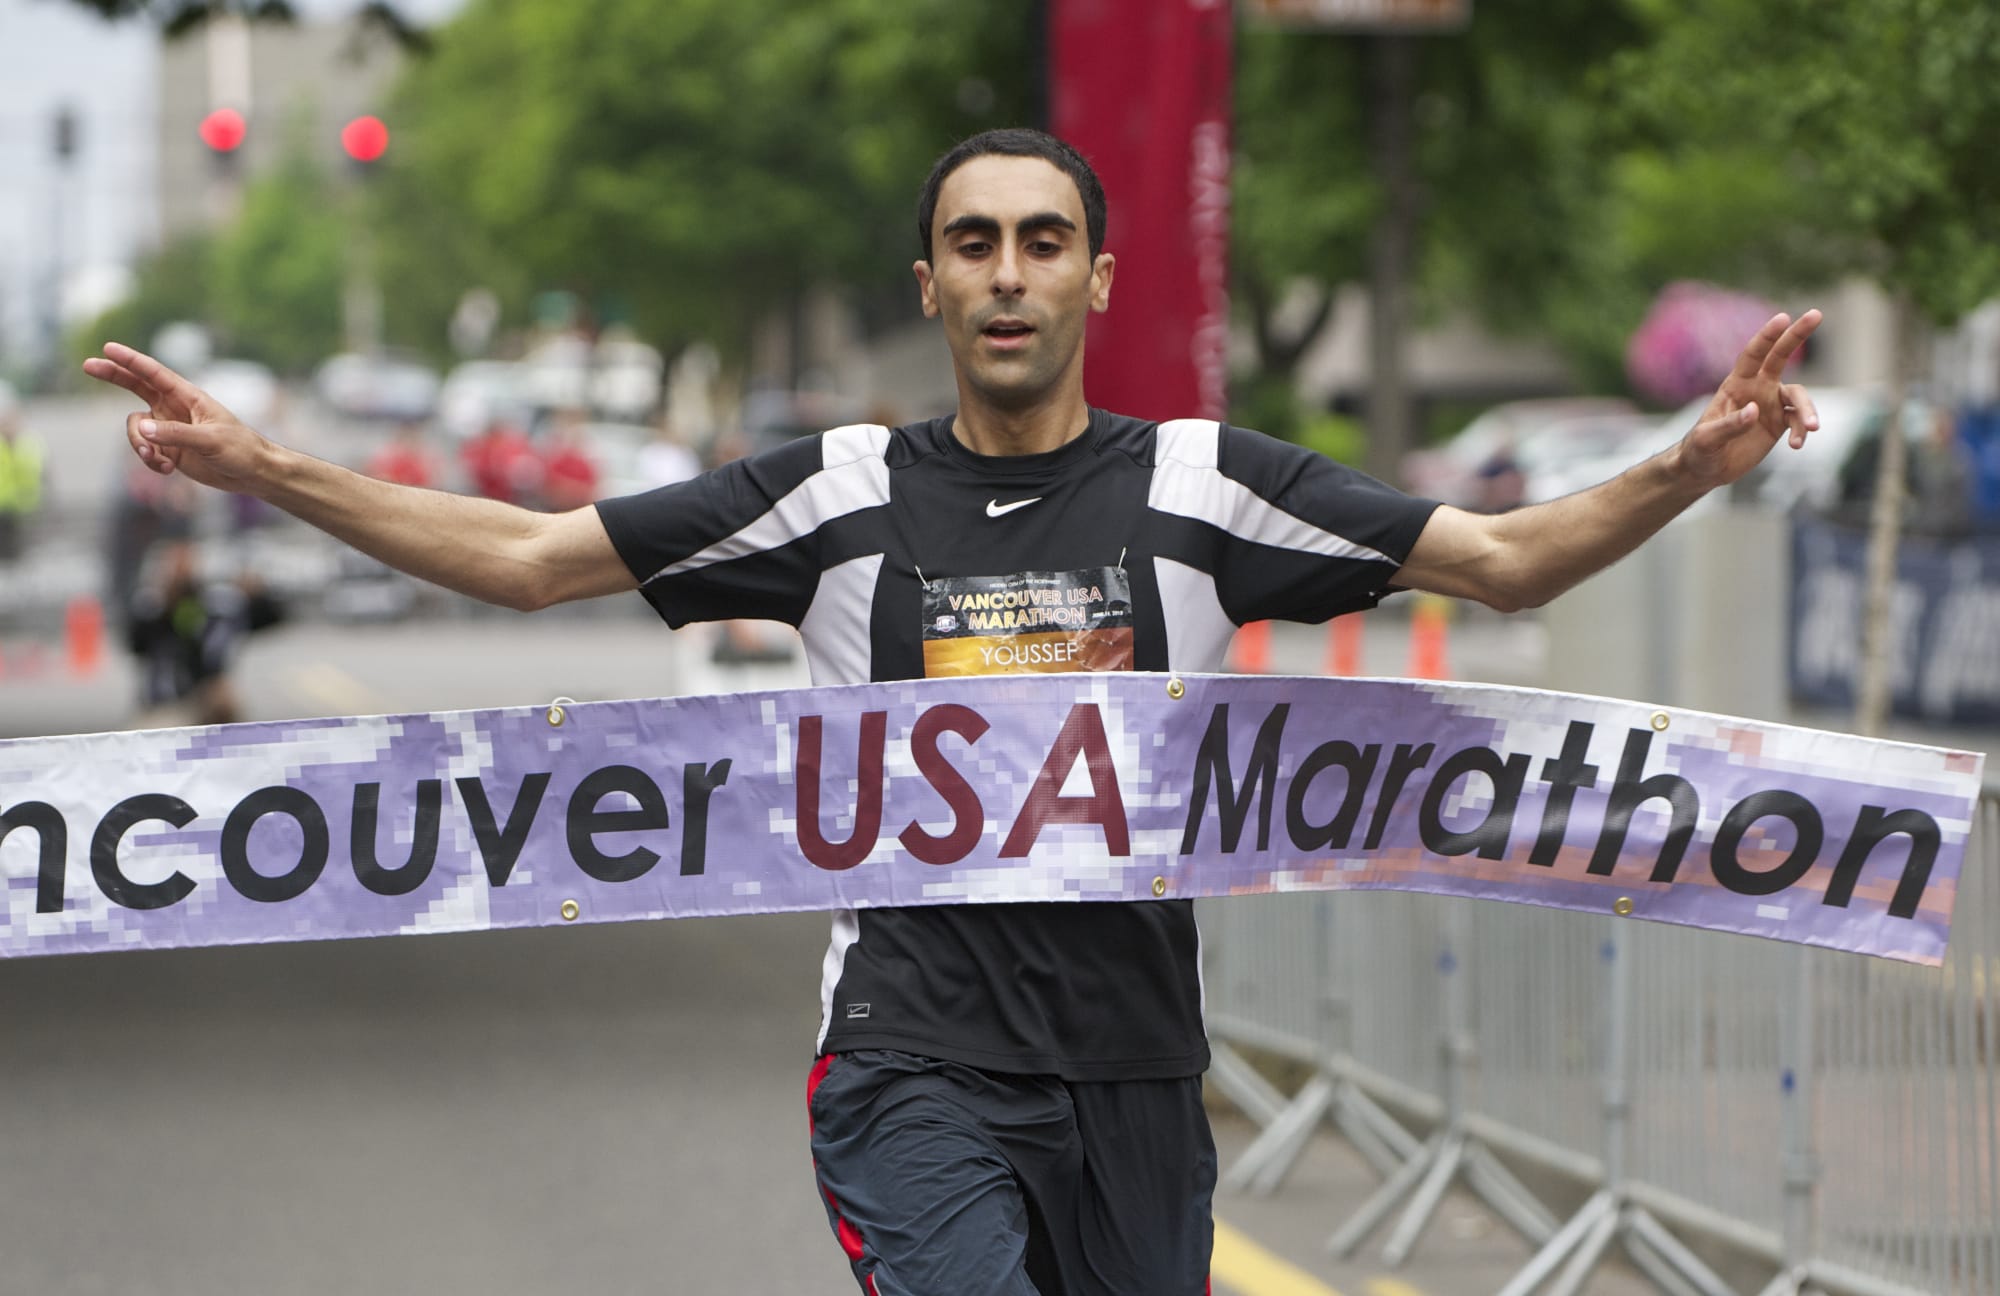 Youssef Zirari won 2013 and 2012 Vancouver USA marathons